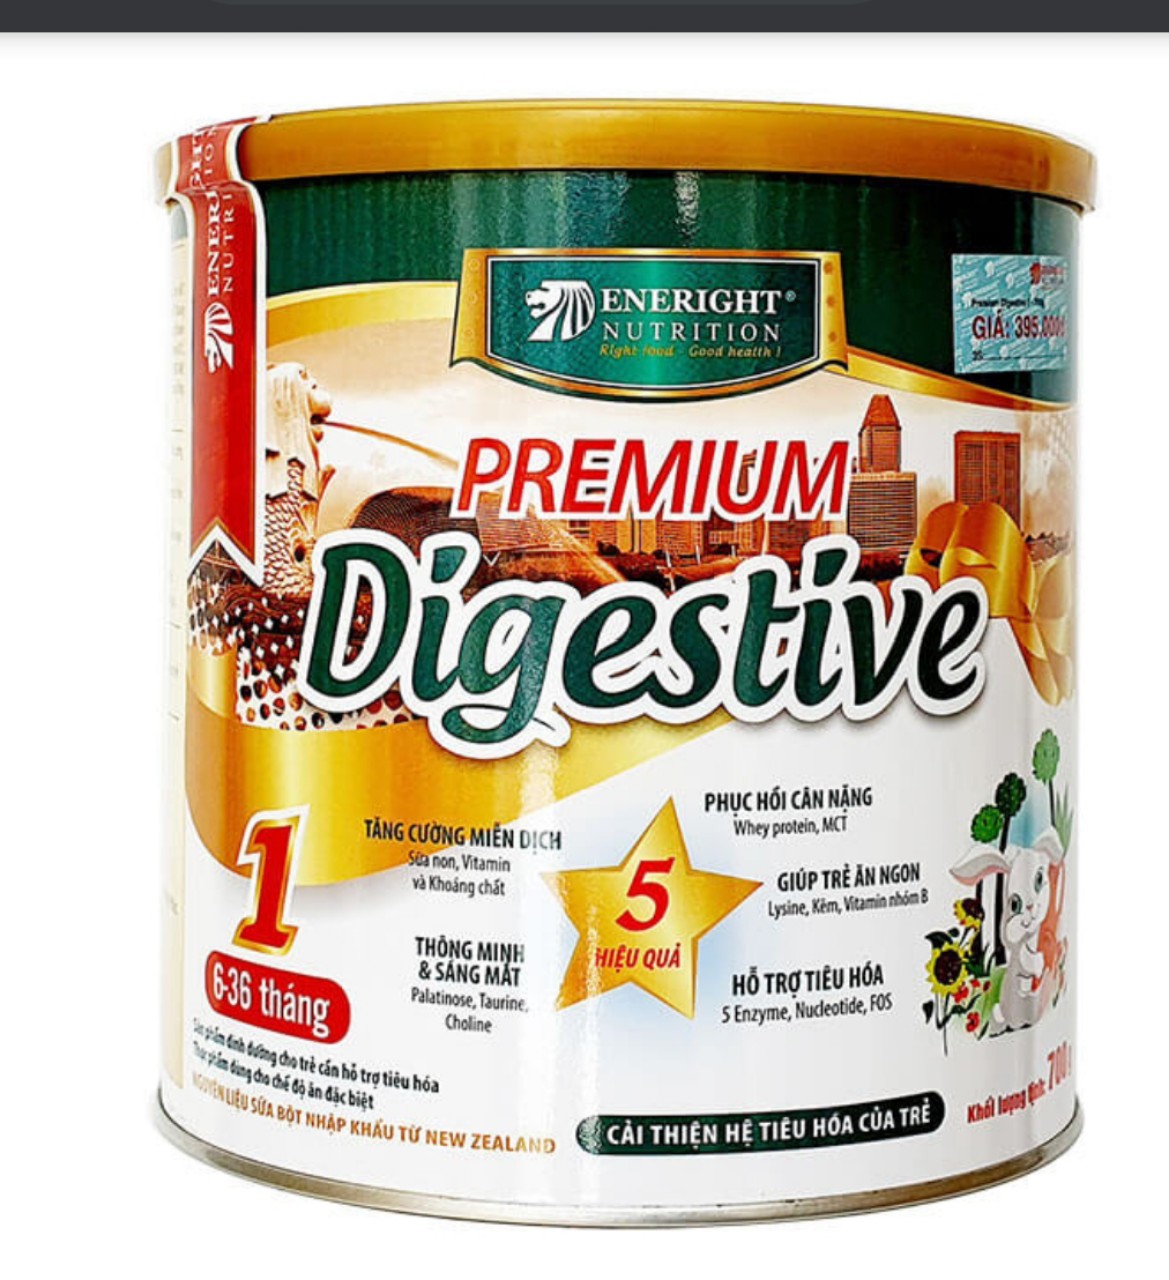 Digestive 1 700g 6-36 tháng